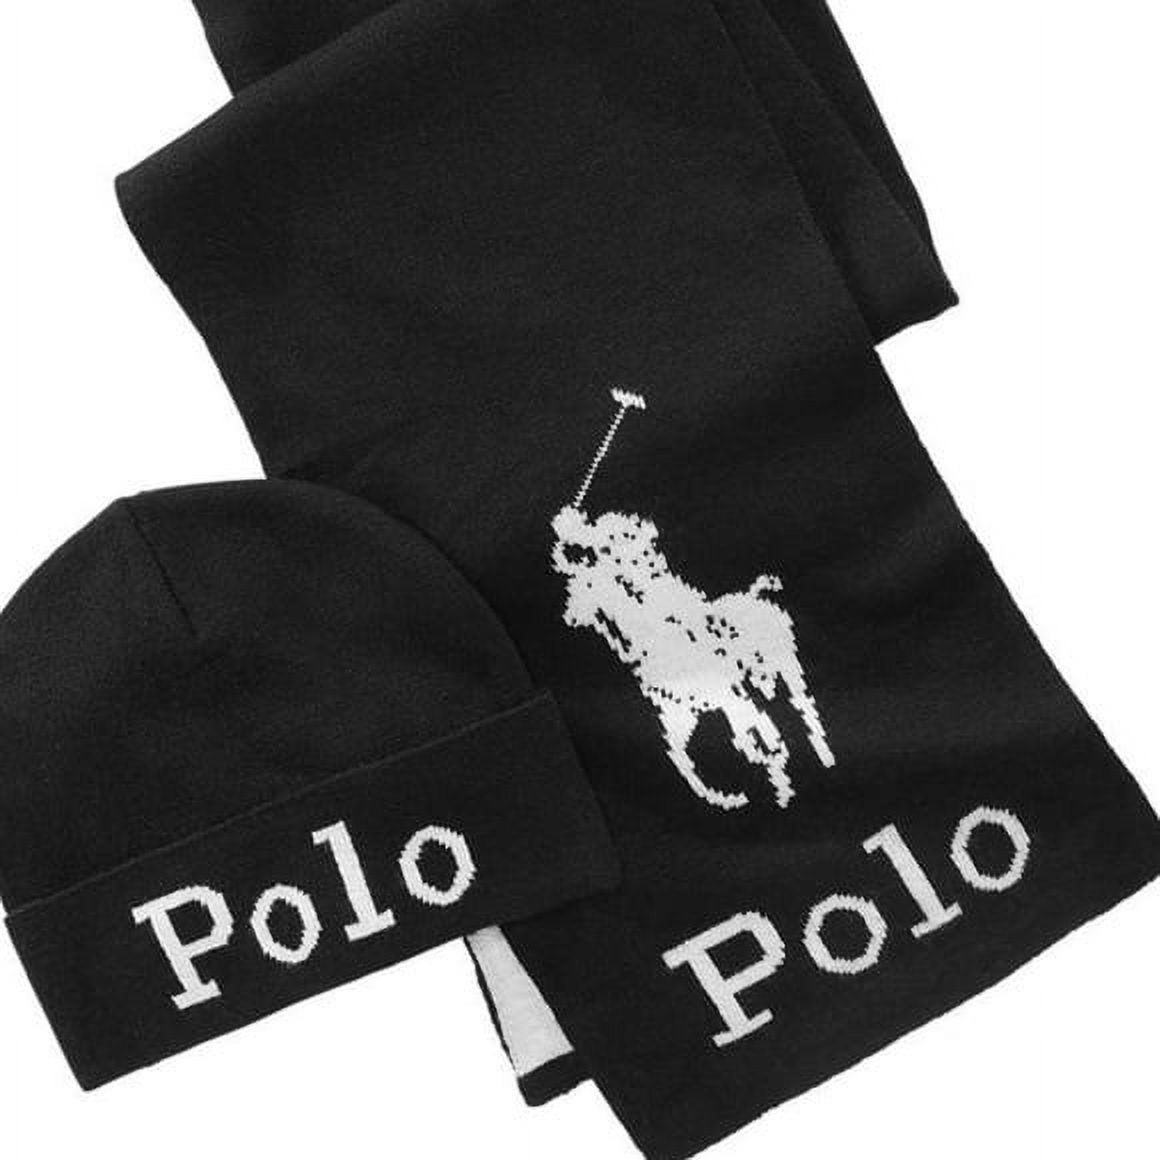 Polo Ralph Lauren Mens Wool Blend Winter Hat & Scarf Set Black O/S - image 2 of 2